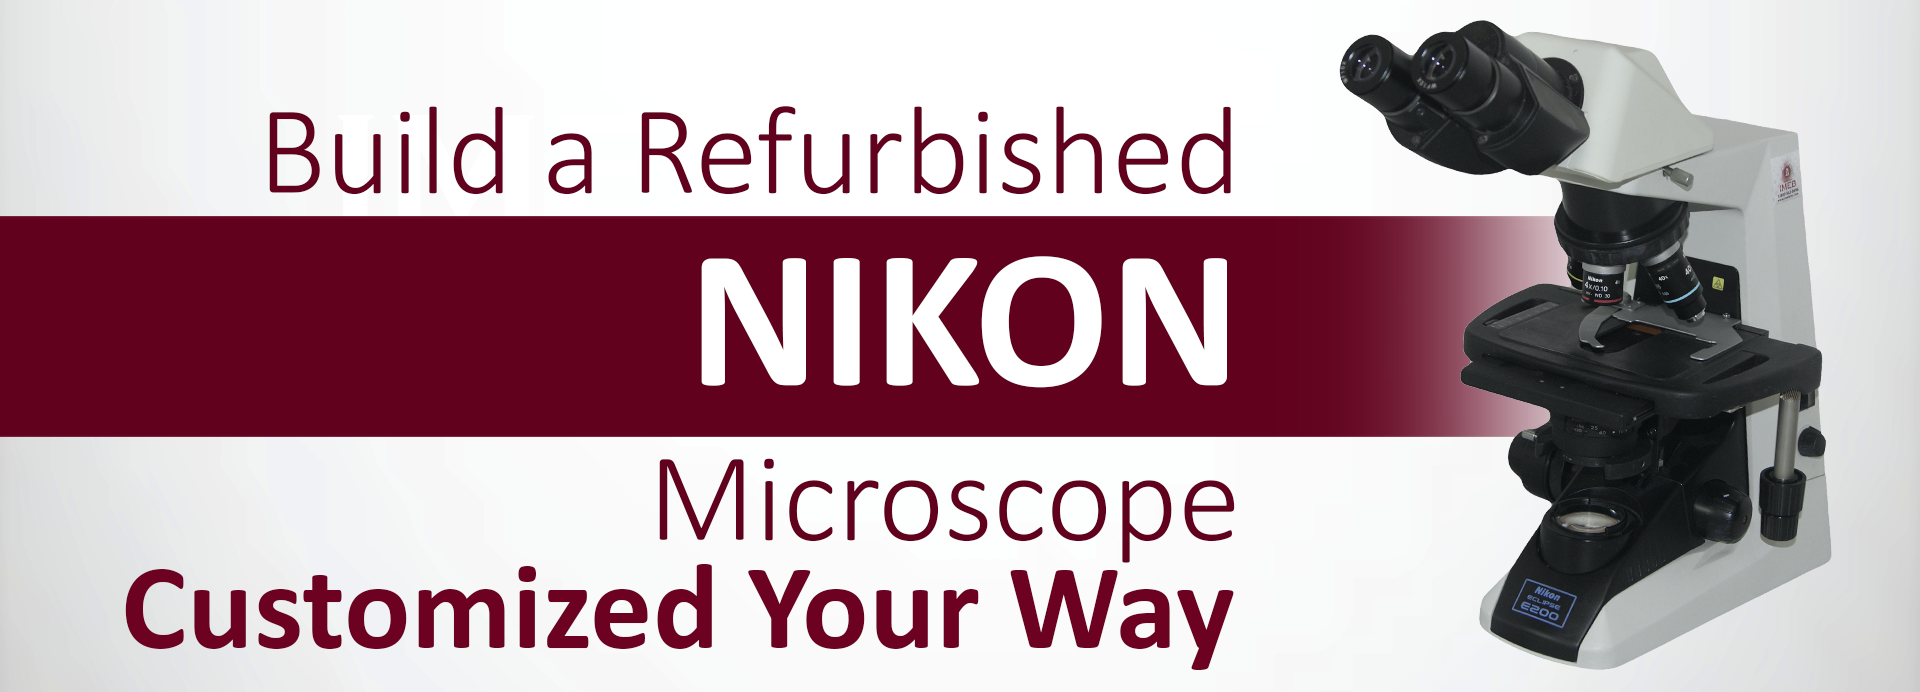 Refurbished Nikon microscope custom banner